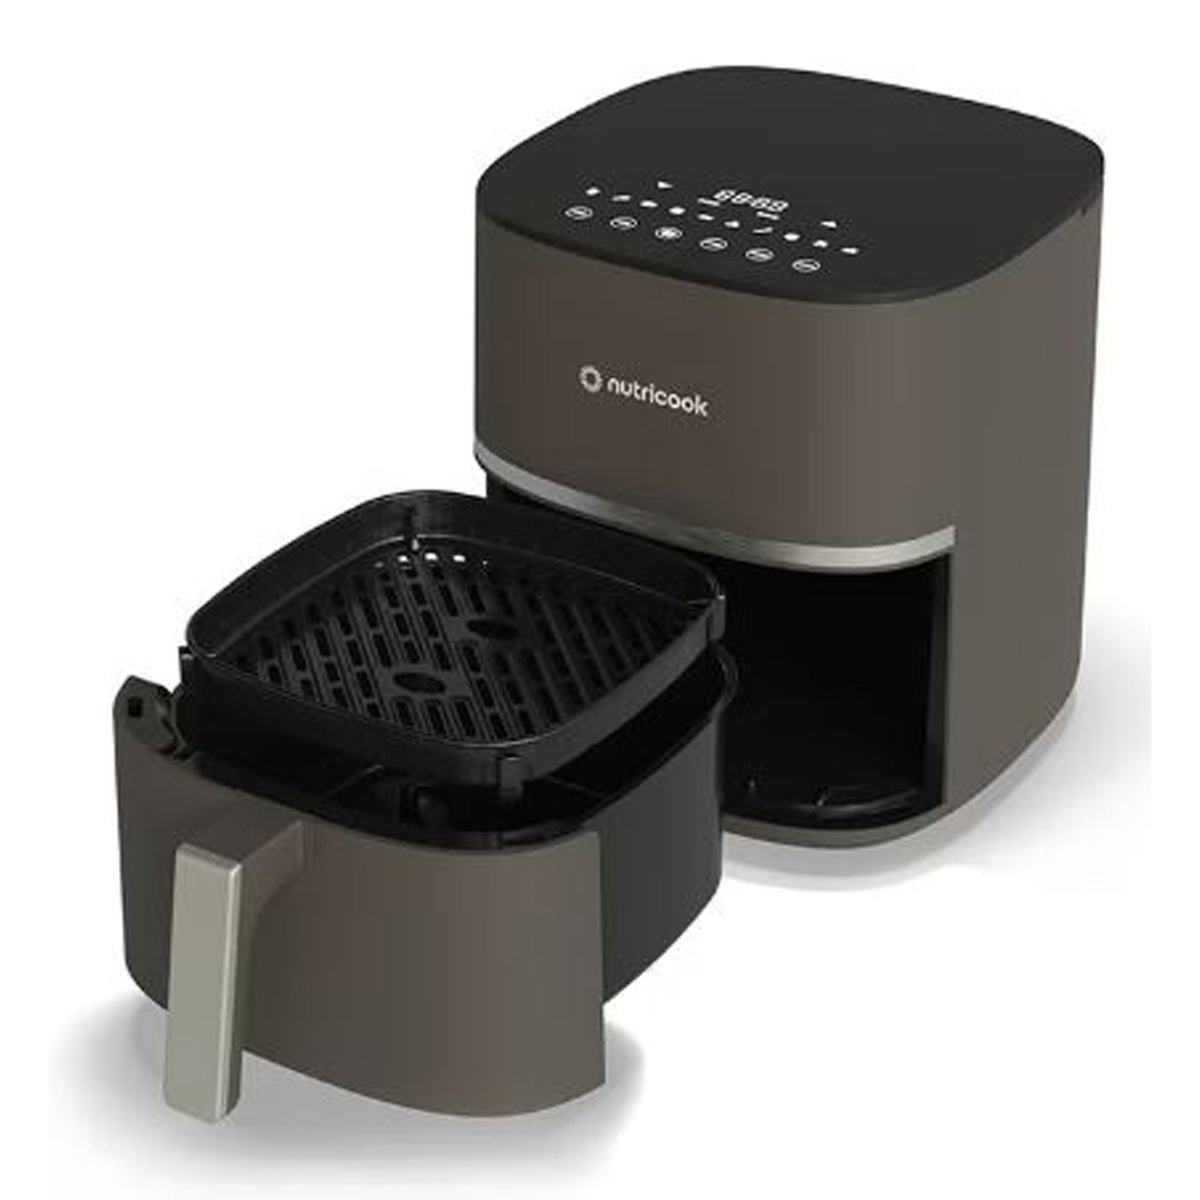 Nutricook Essentials Air Fryer with Digital Controls, 5.2 L, AFE152D-G